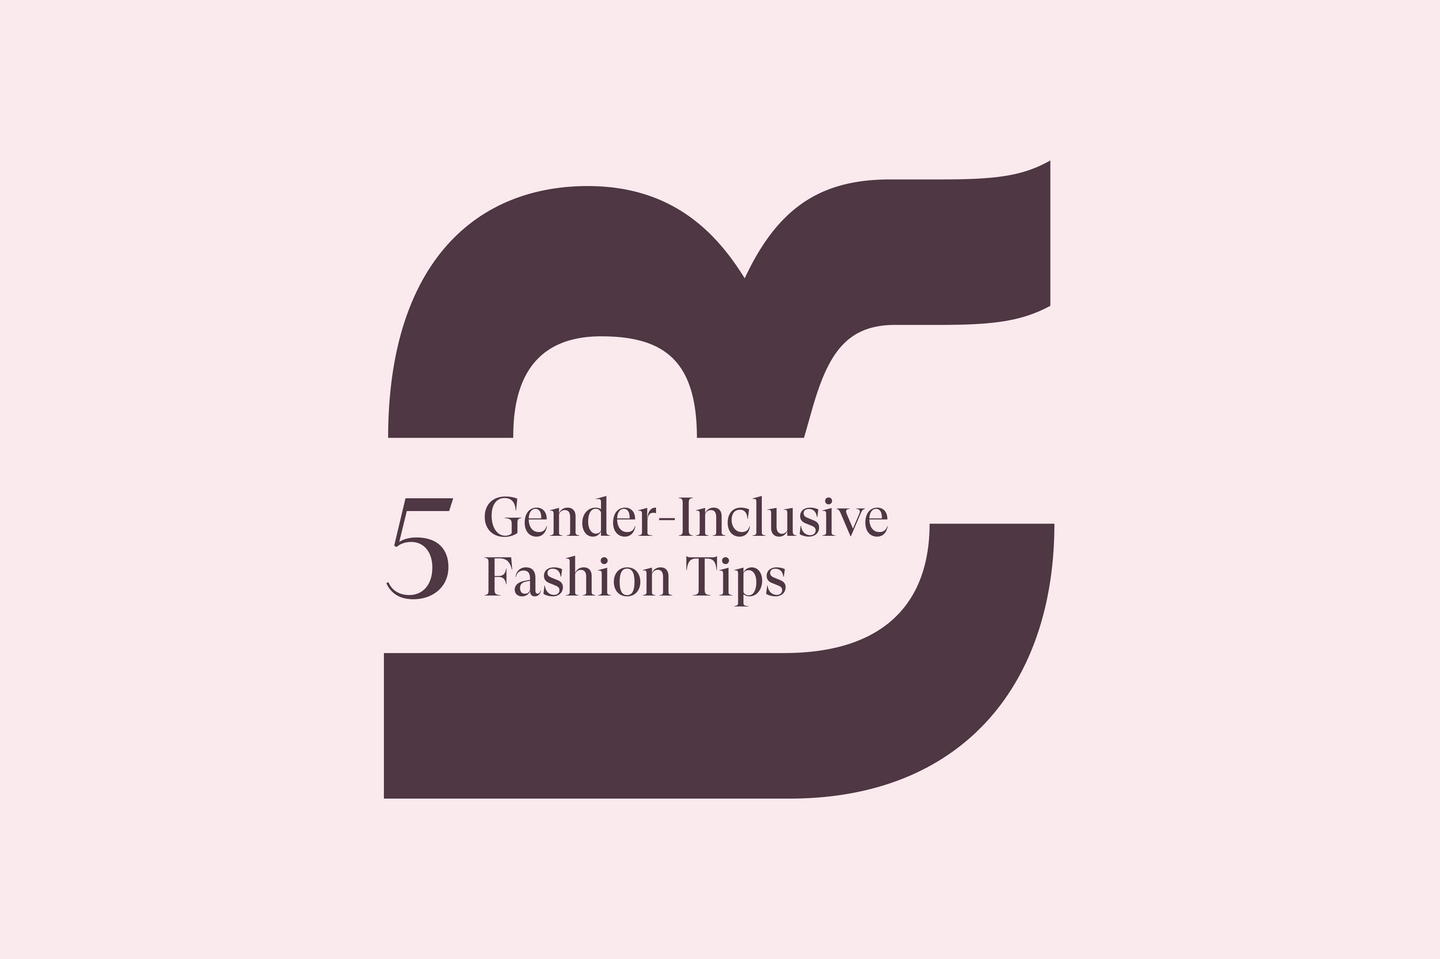 5 Gender-Inclusive Fashion Tips